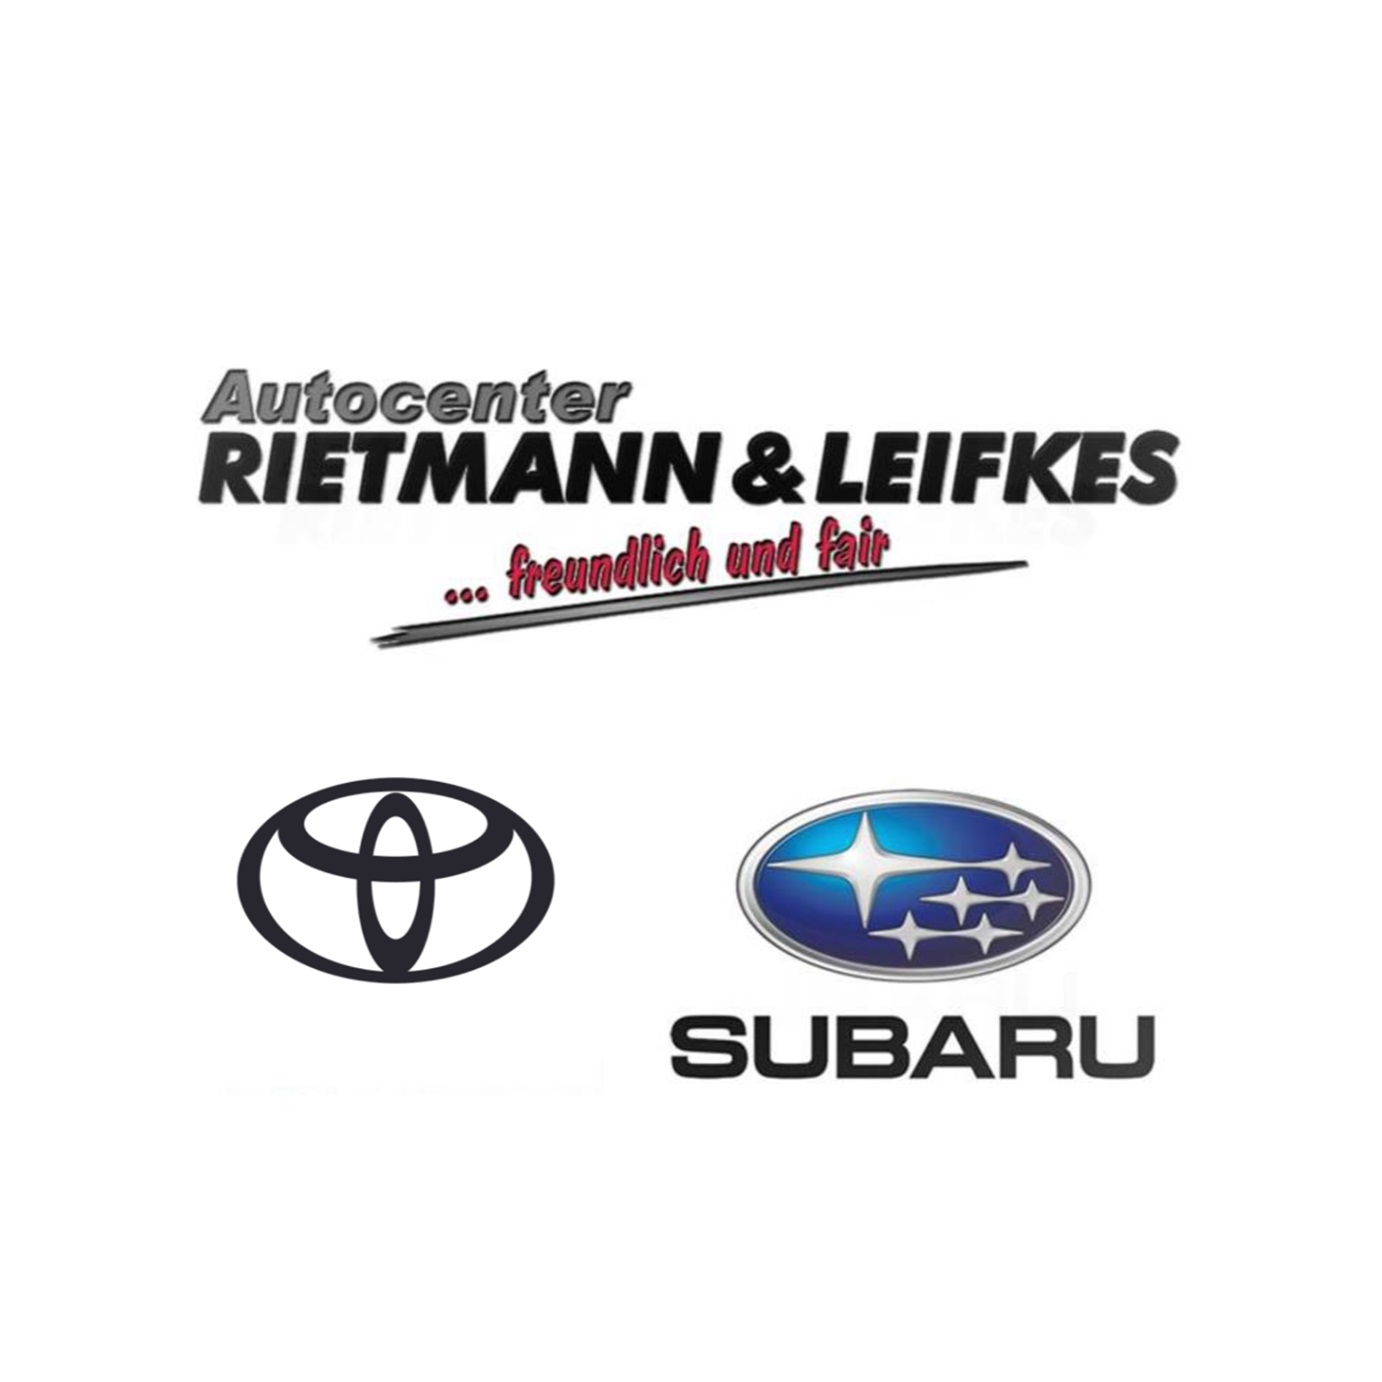 Autocenter Rietmann & Leifkes